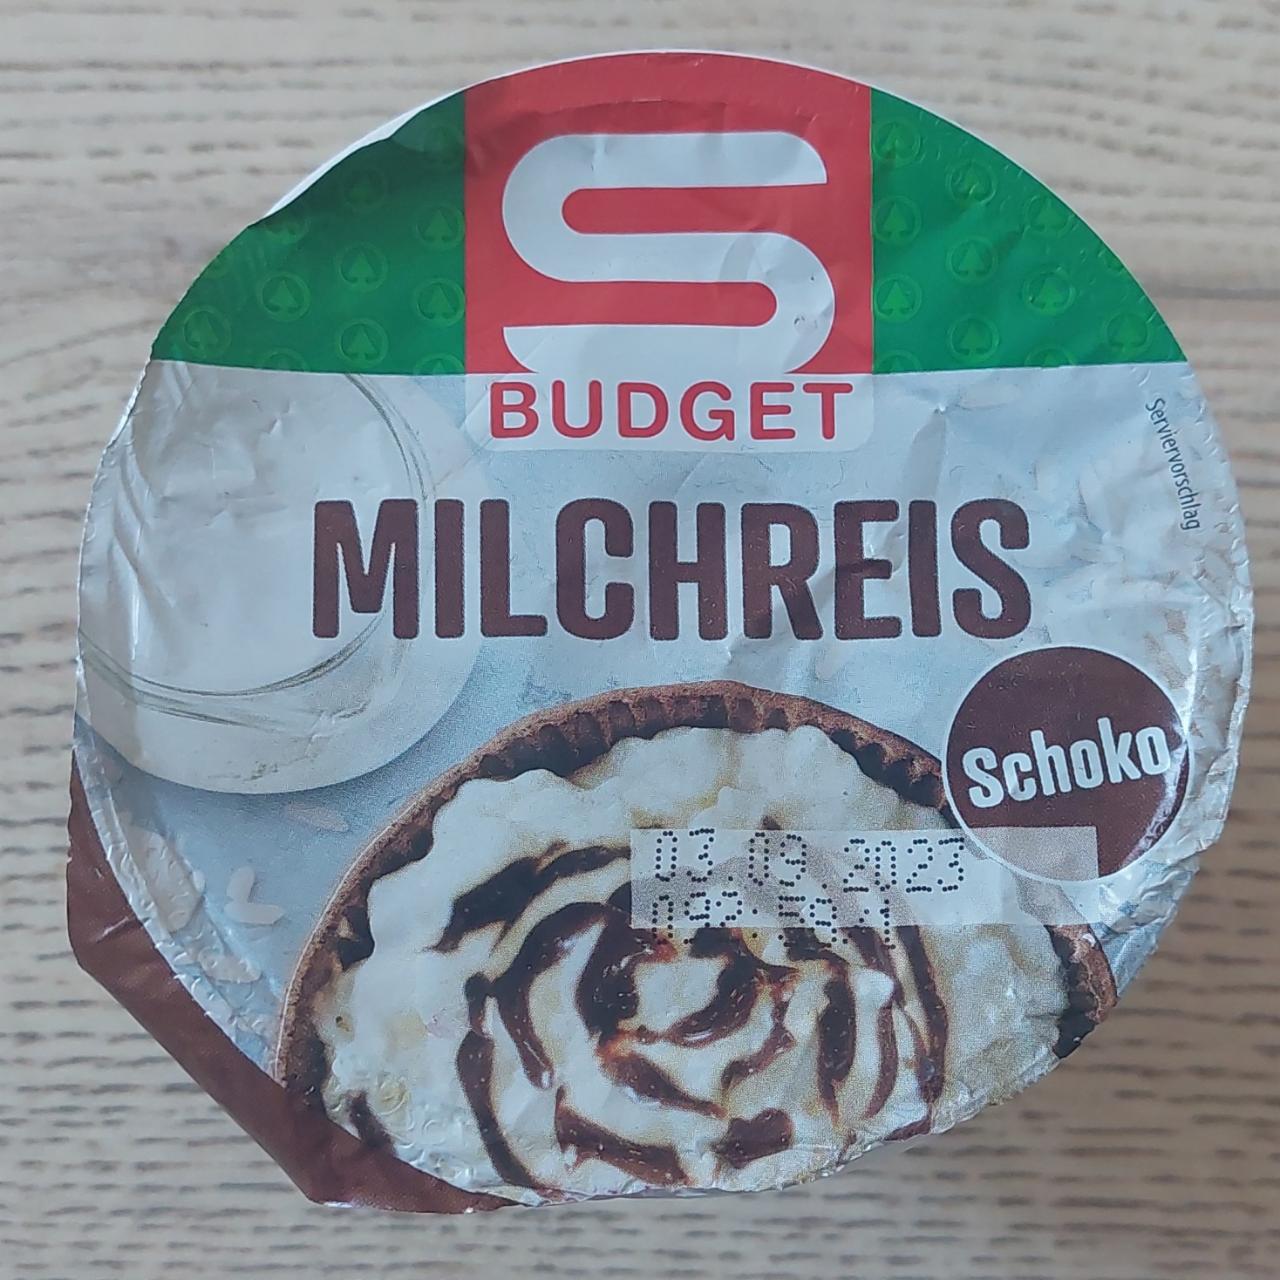 Fotografie - Milchreis Schoko S Budget